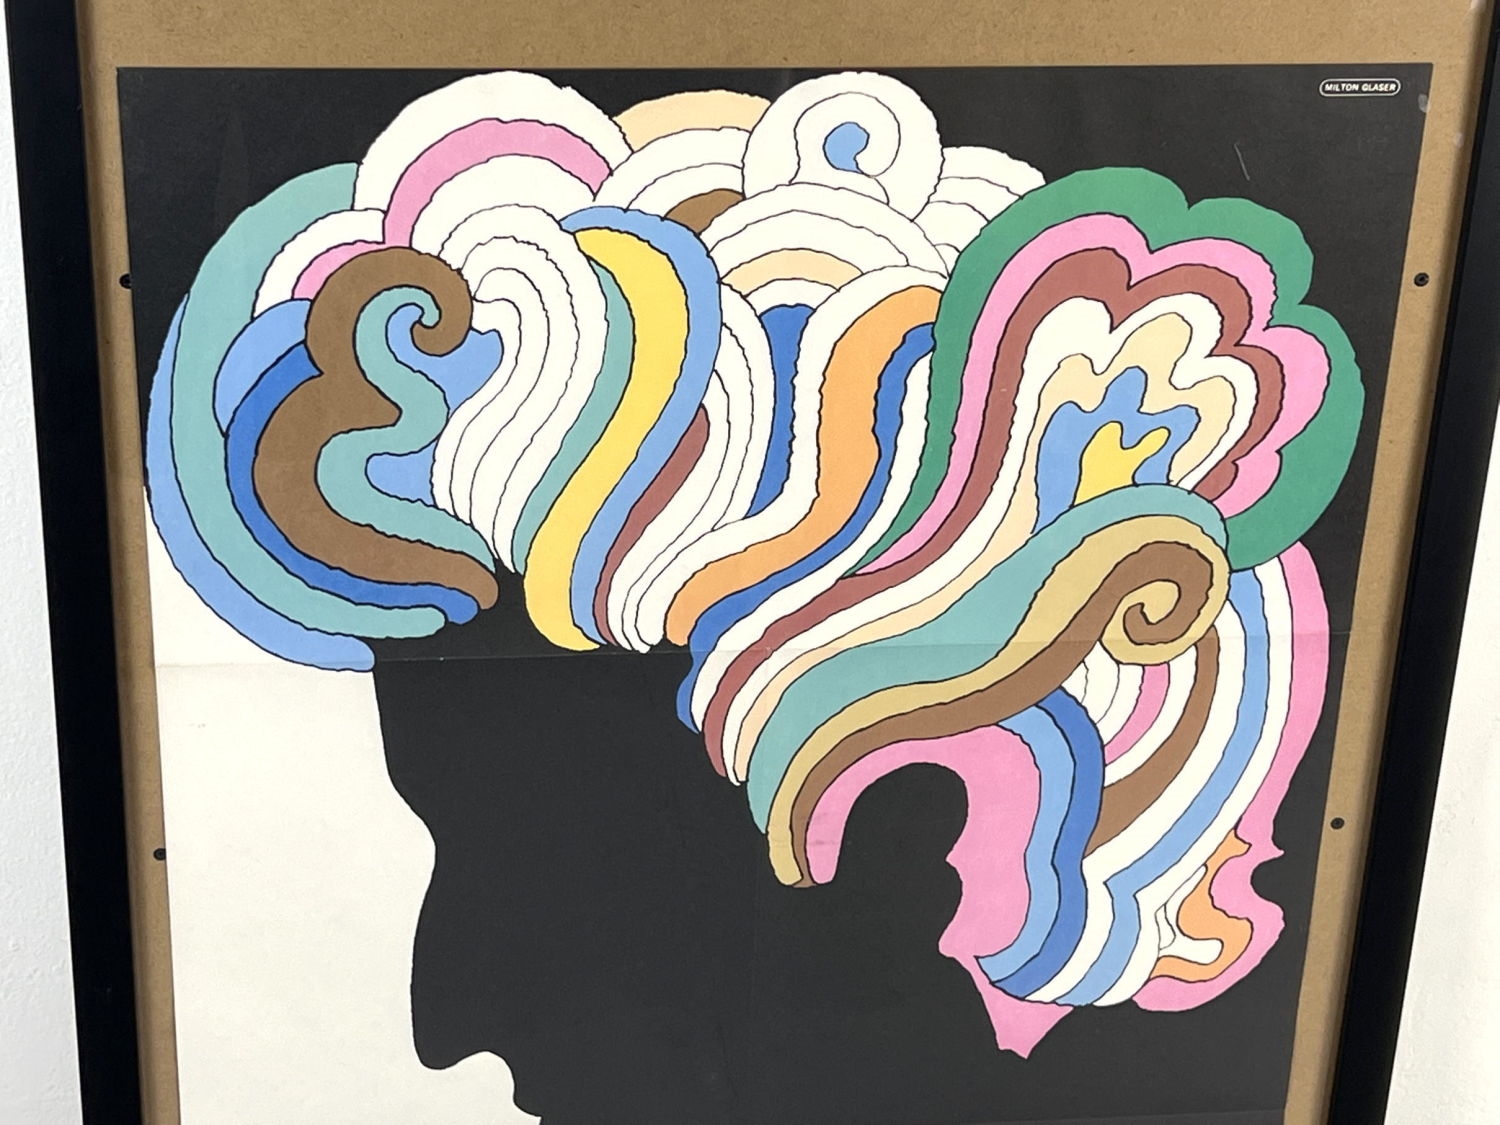 Artwork by Milton Glaser, Bob Dylan poster by Milton Glaser., Made of poster